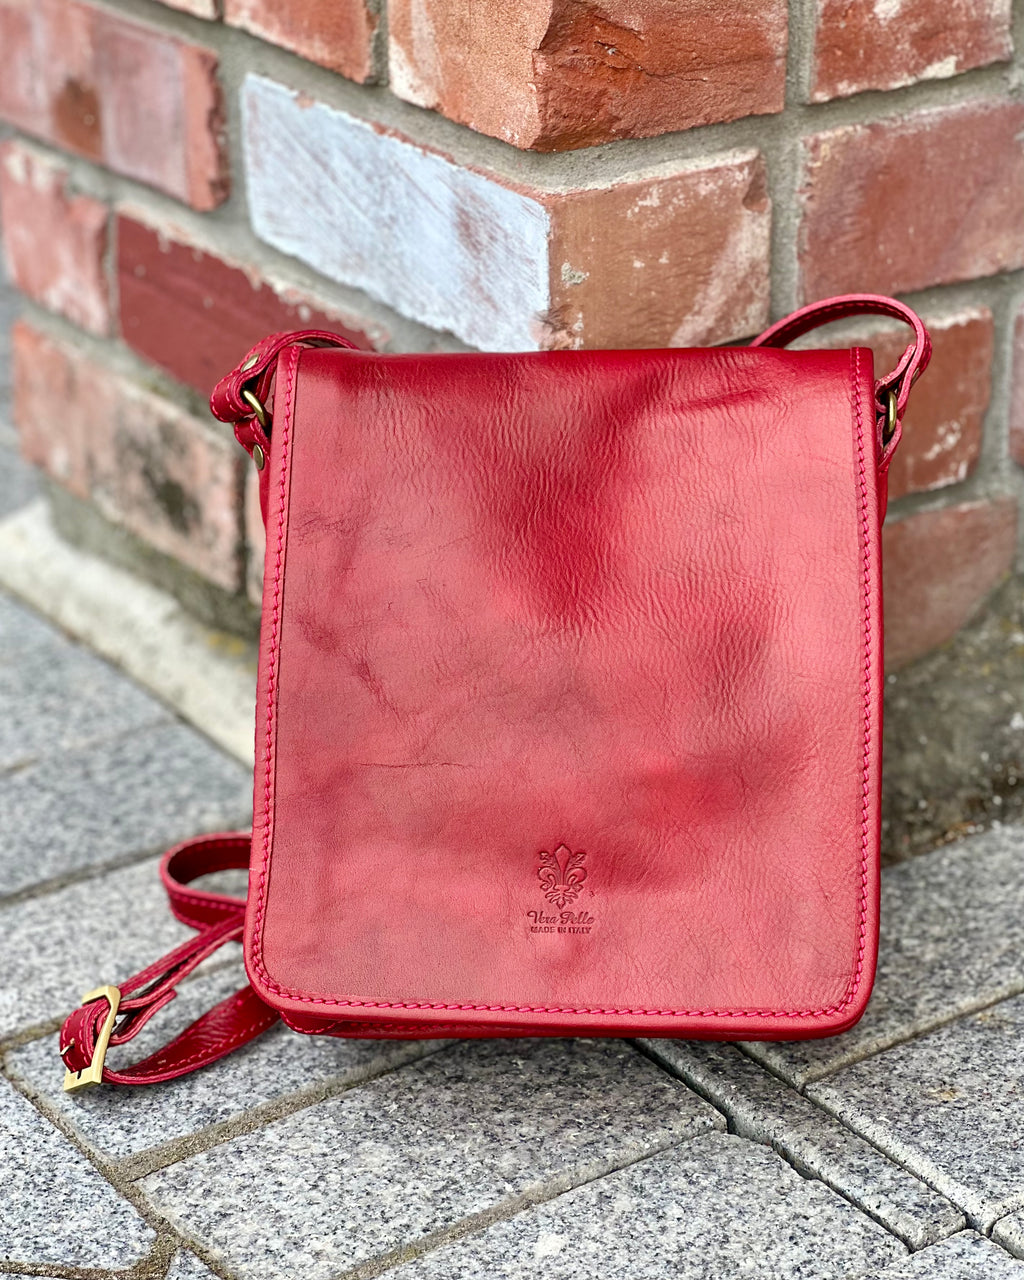 Genuine leather satchel by Emporia Italia - Dark red leather satchel